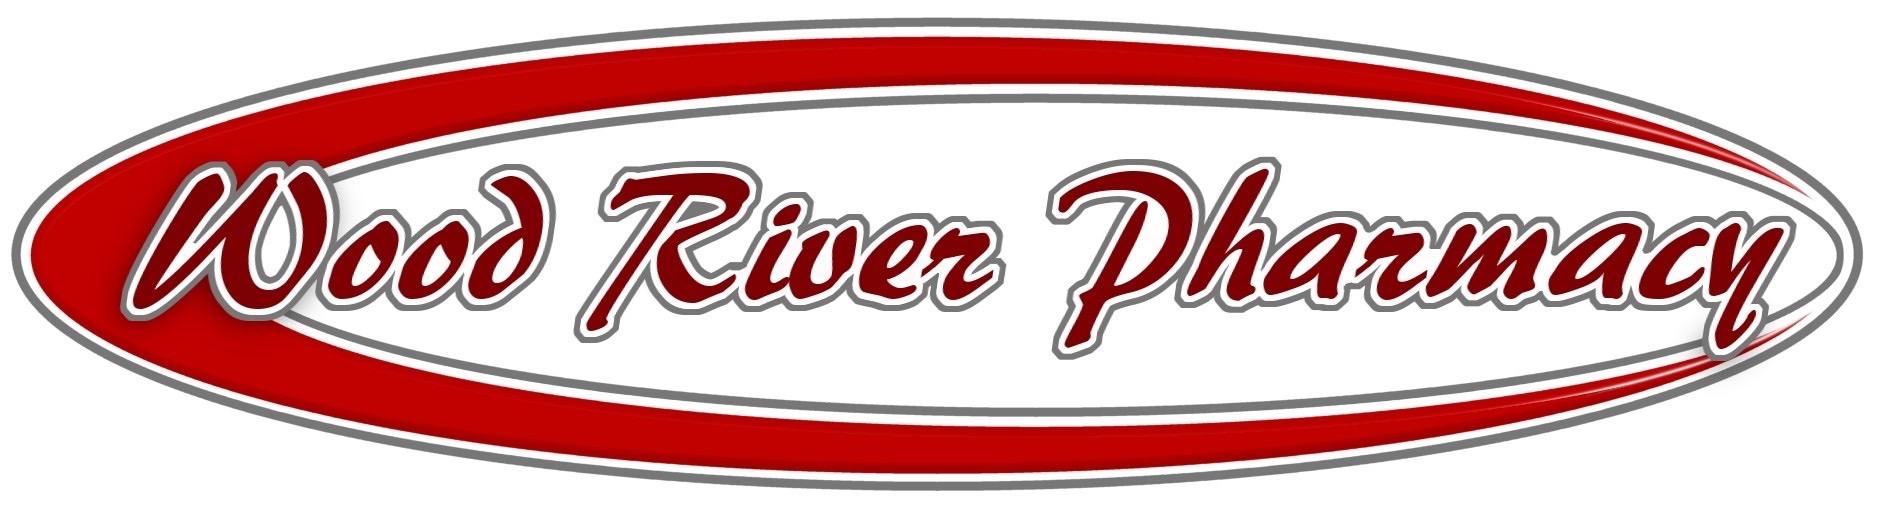 Wood River Pharmacy